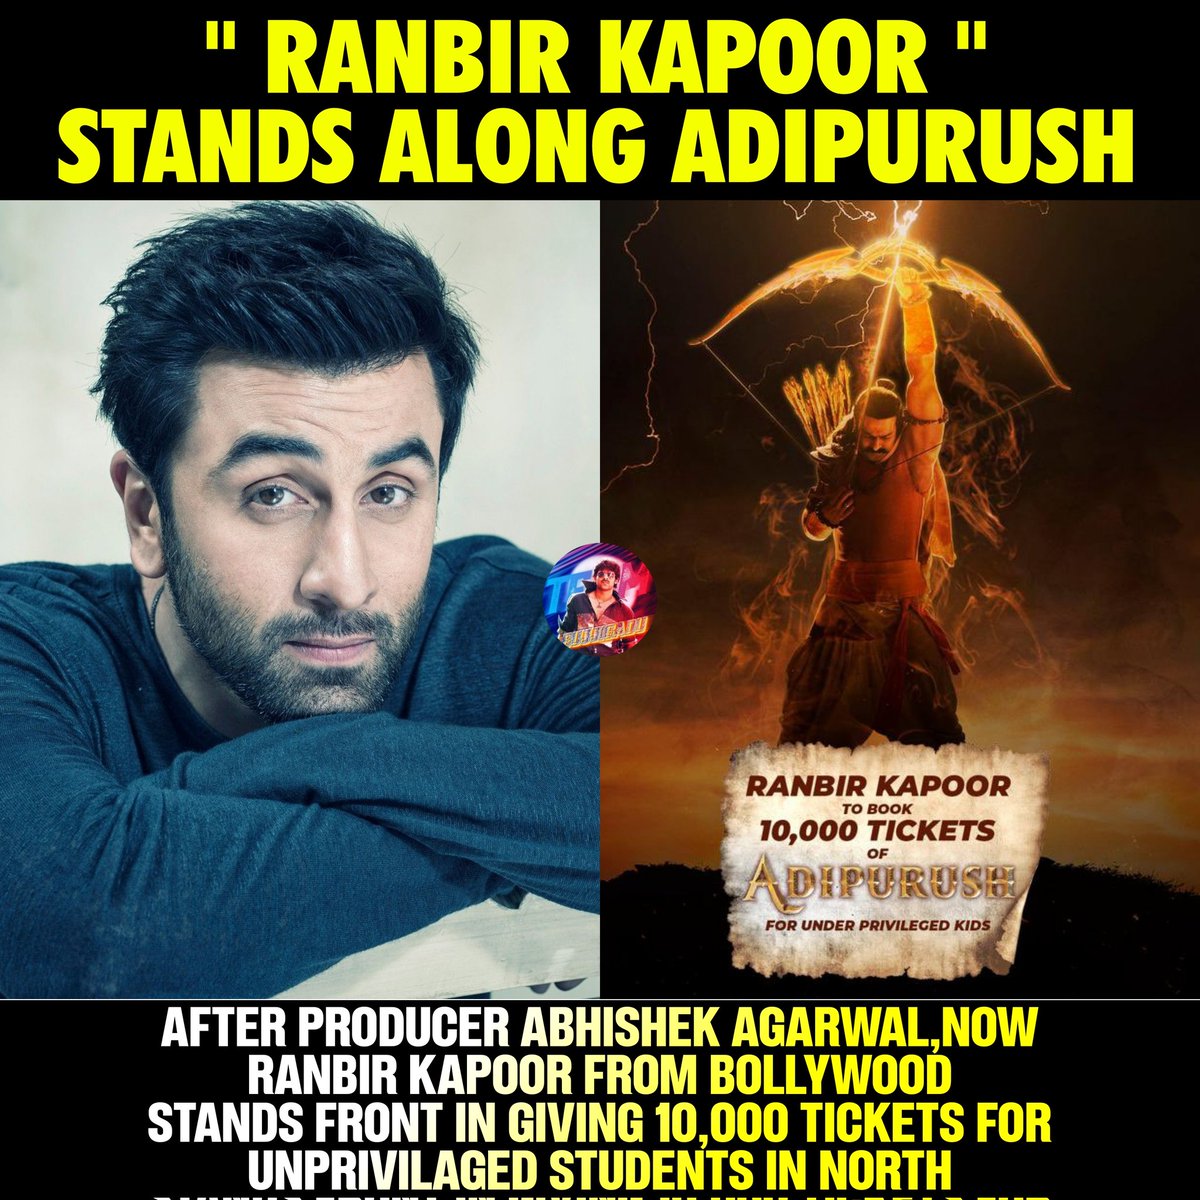 Great Gesture #RanbirKapoor 🫶

#Prabhas #Adipurush